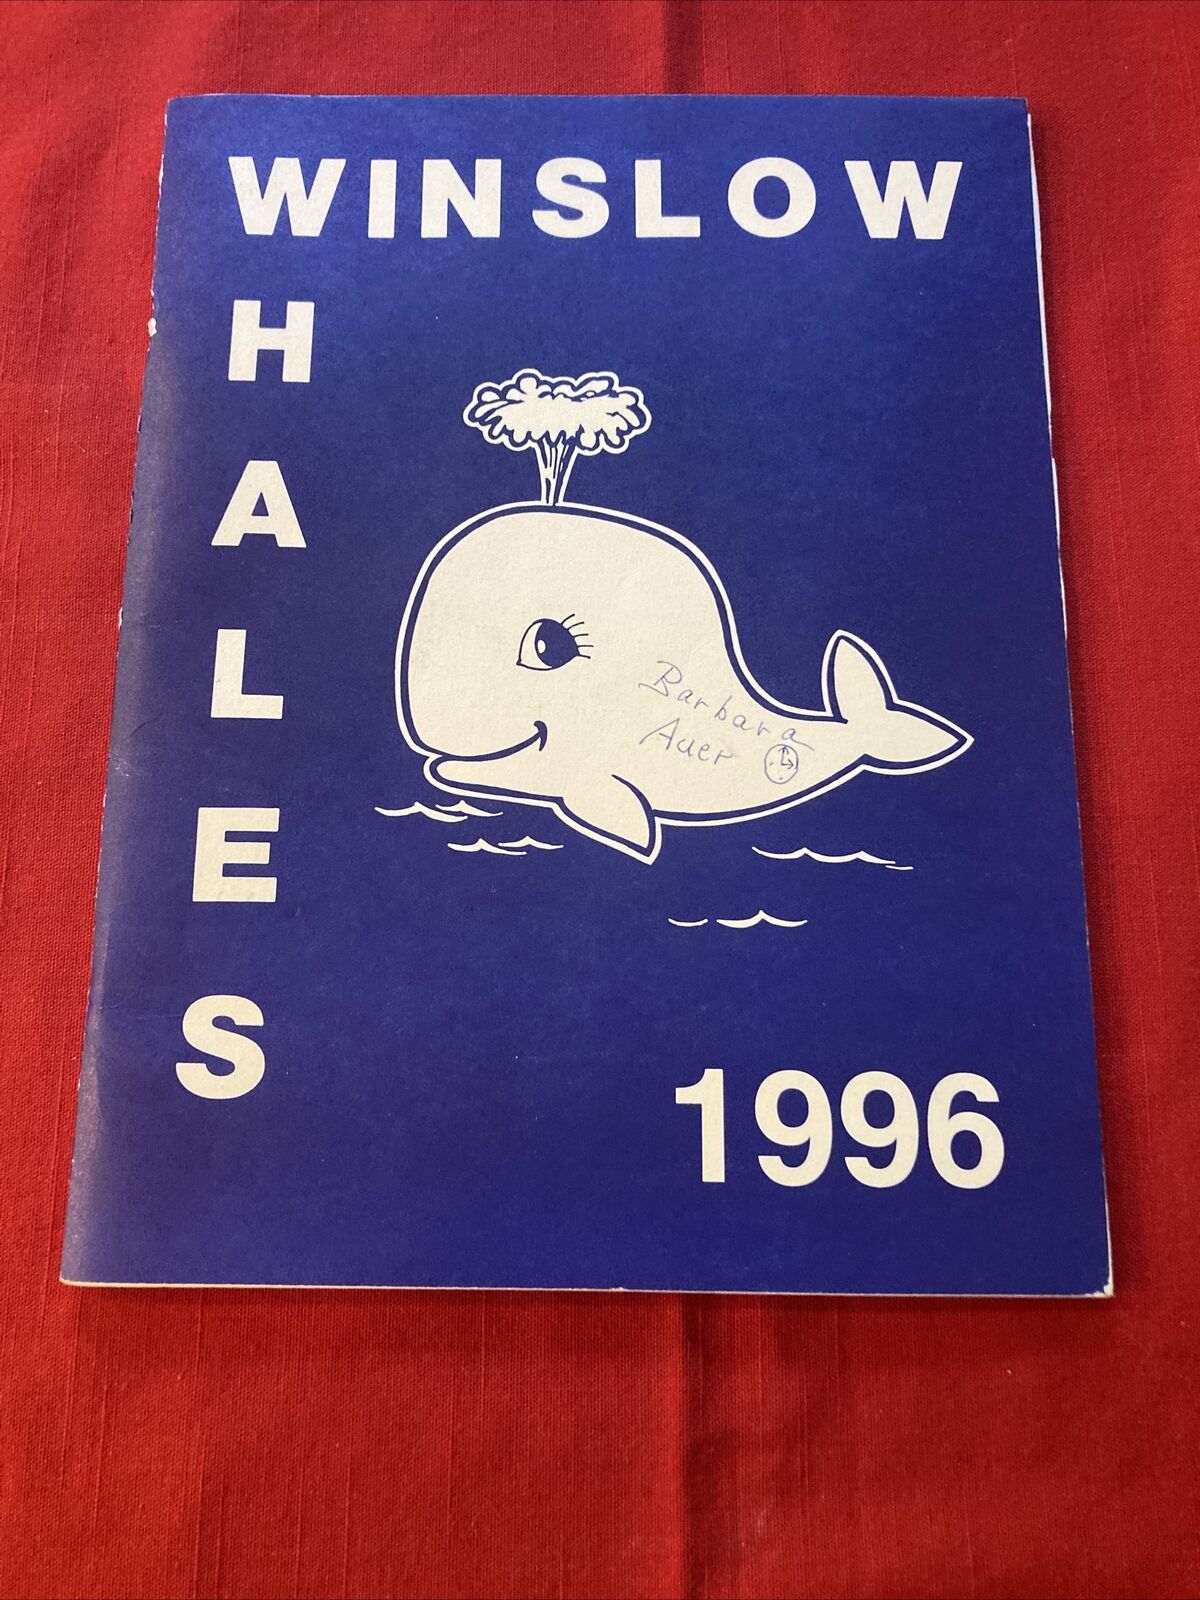 Winslow elementary school yearbook 1996. Winslow New Jersey.